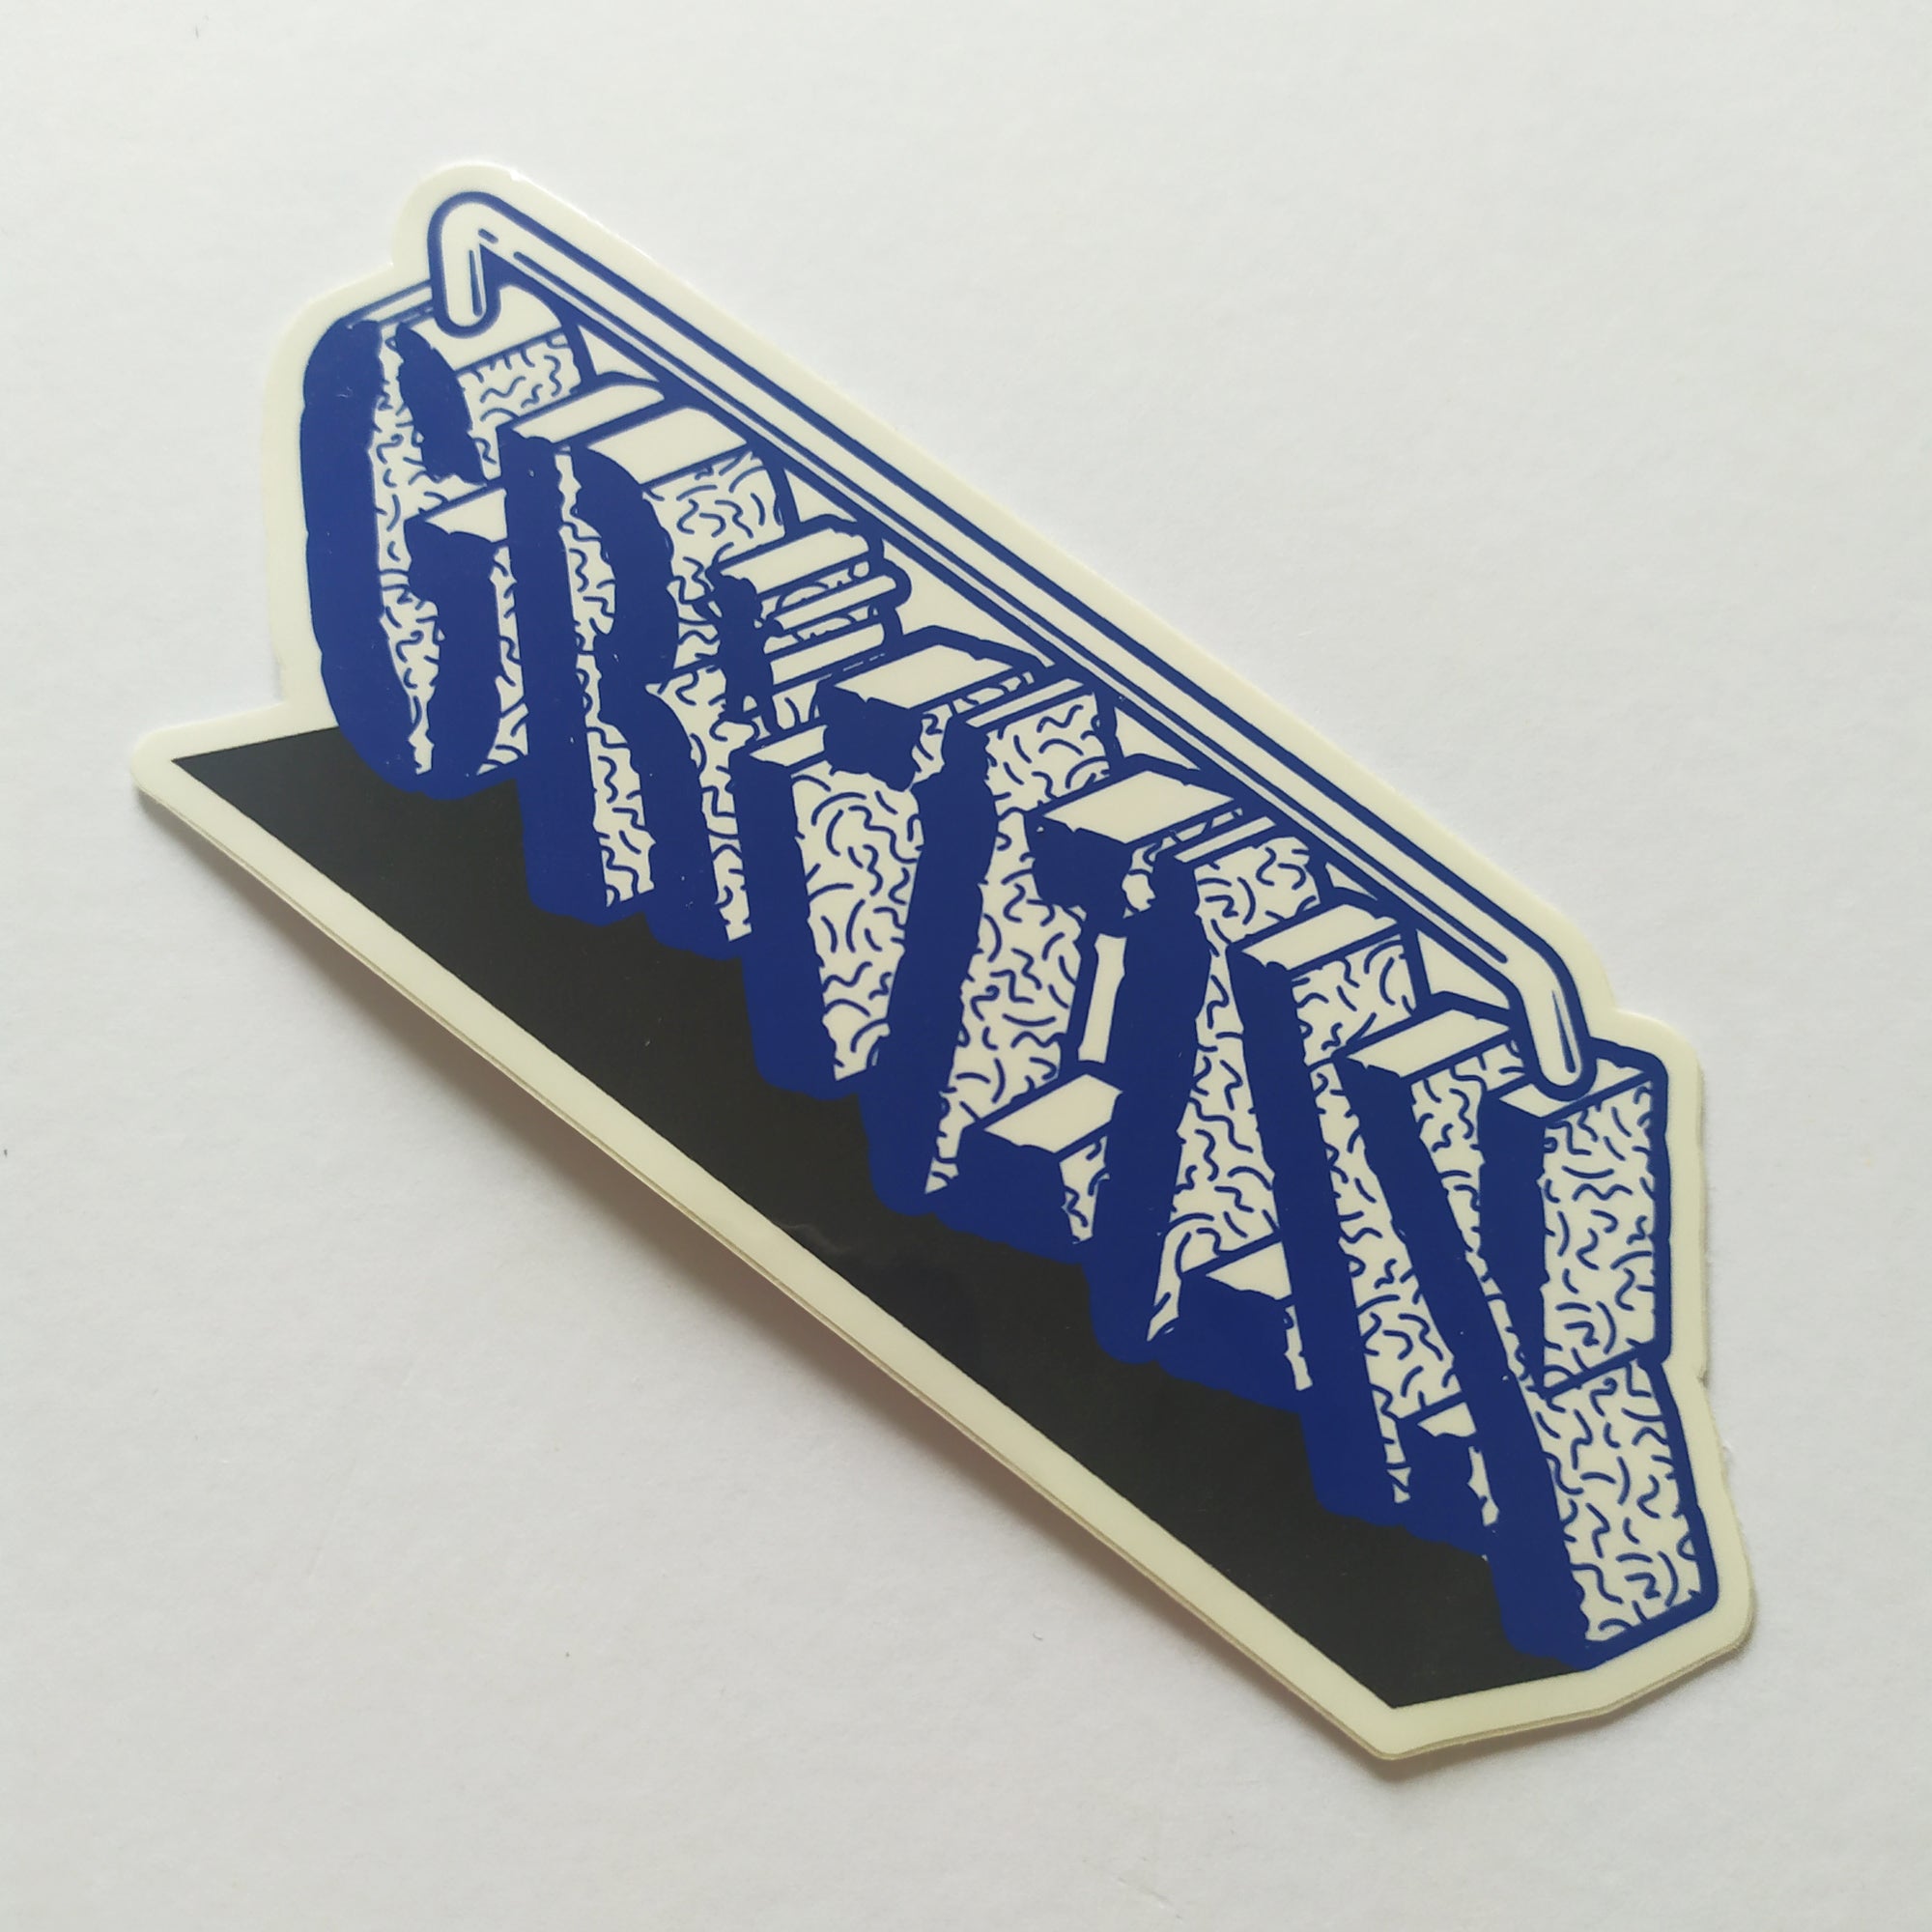 Grizzly Griptape Skateboard Sticker - SkateboardStickers.com